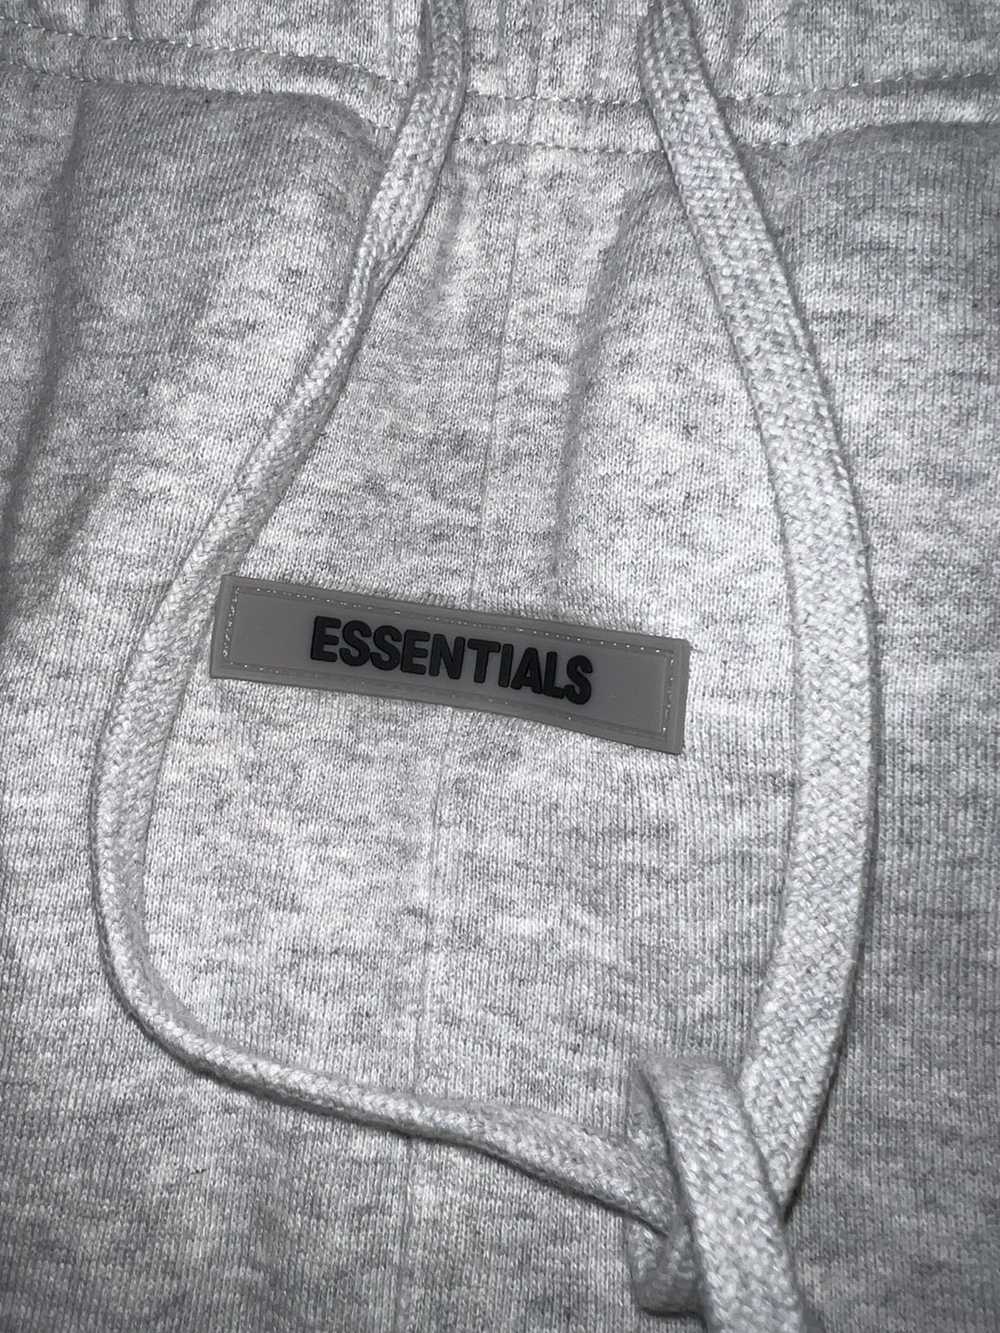 Essentials FOG Essentials Sweatpants (Small) - image 2